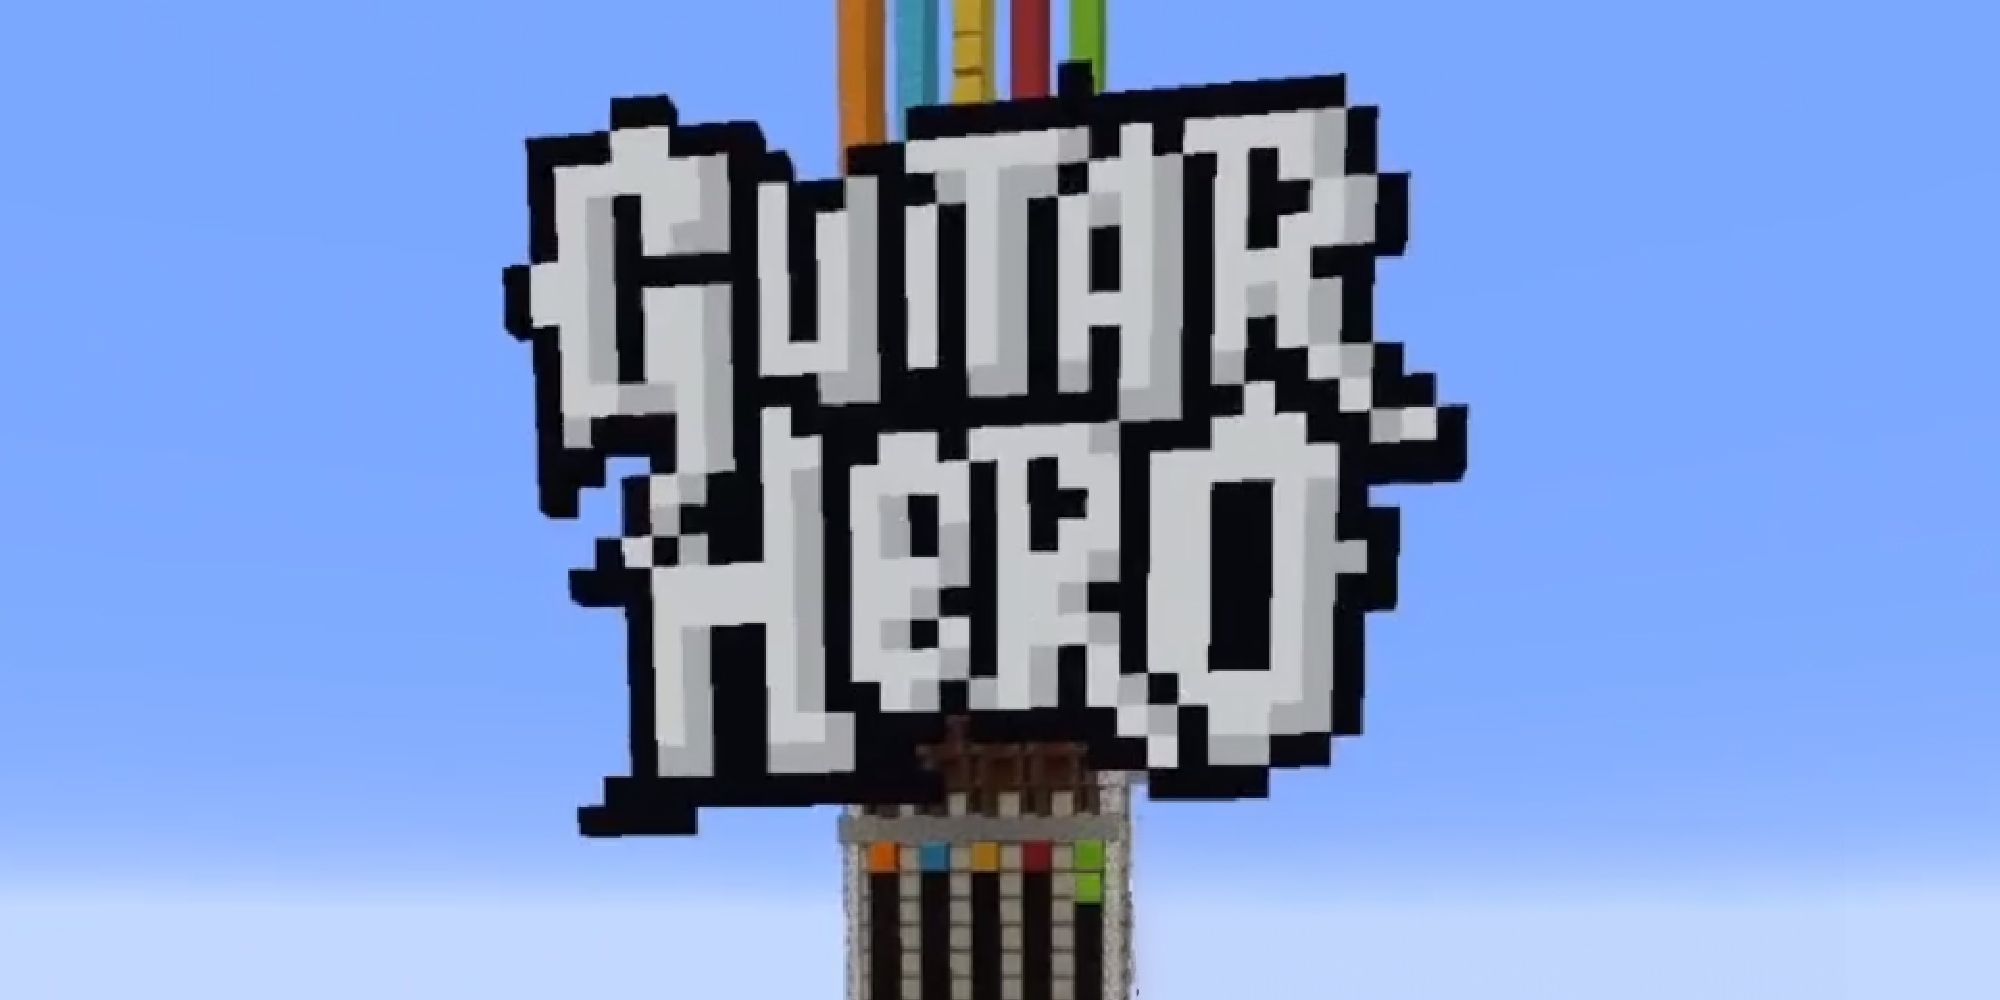 Guitar Hero logo in Minecraft